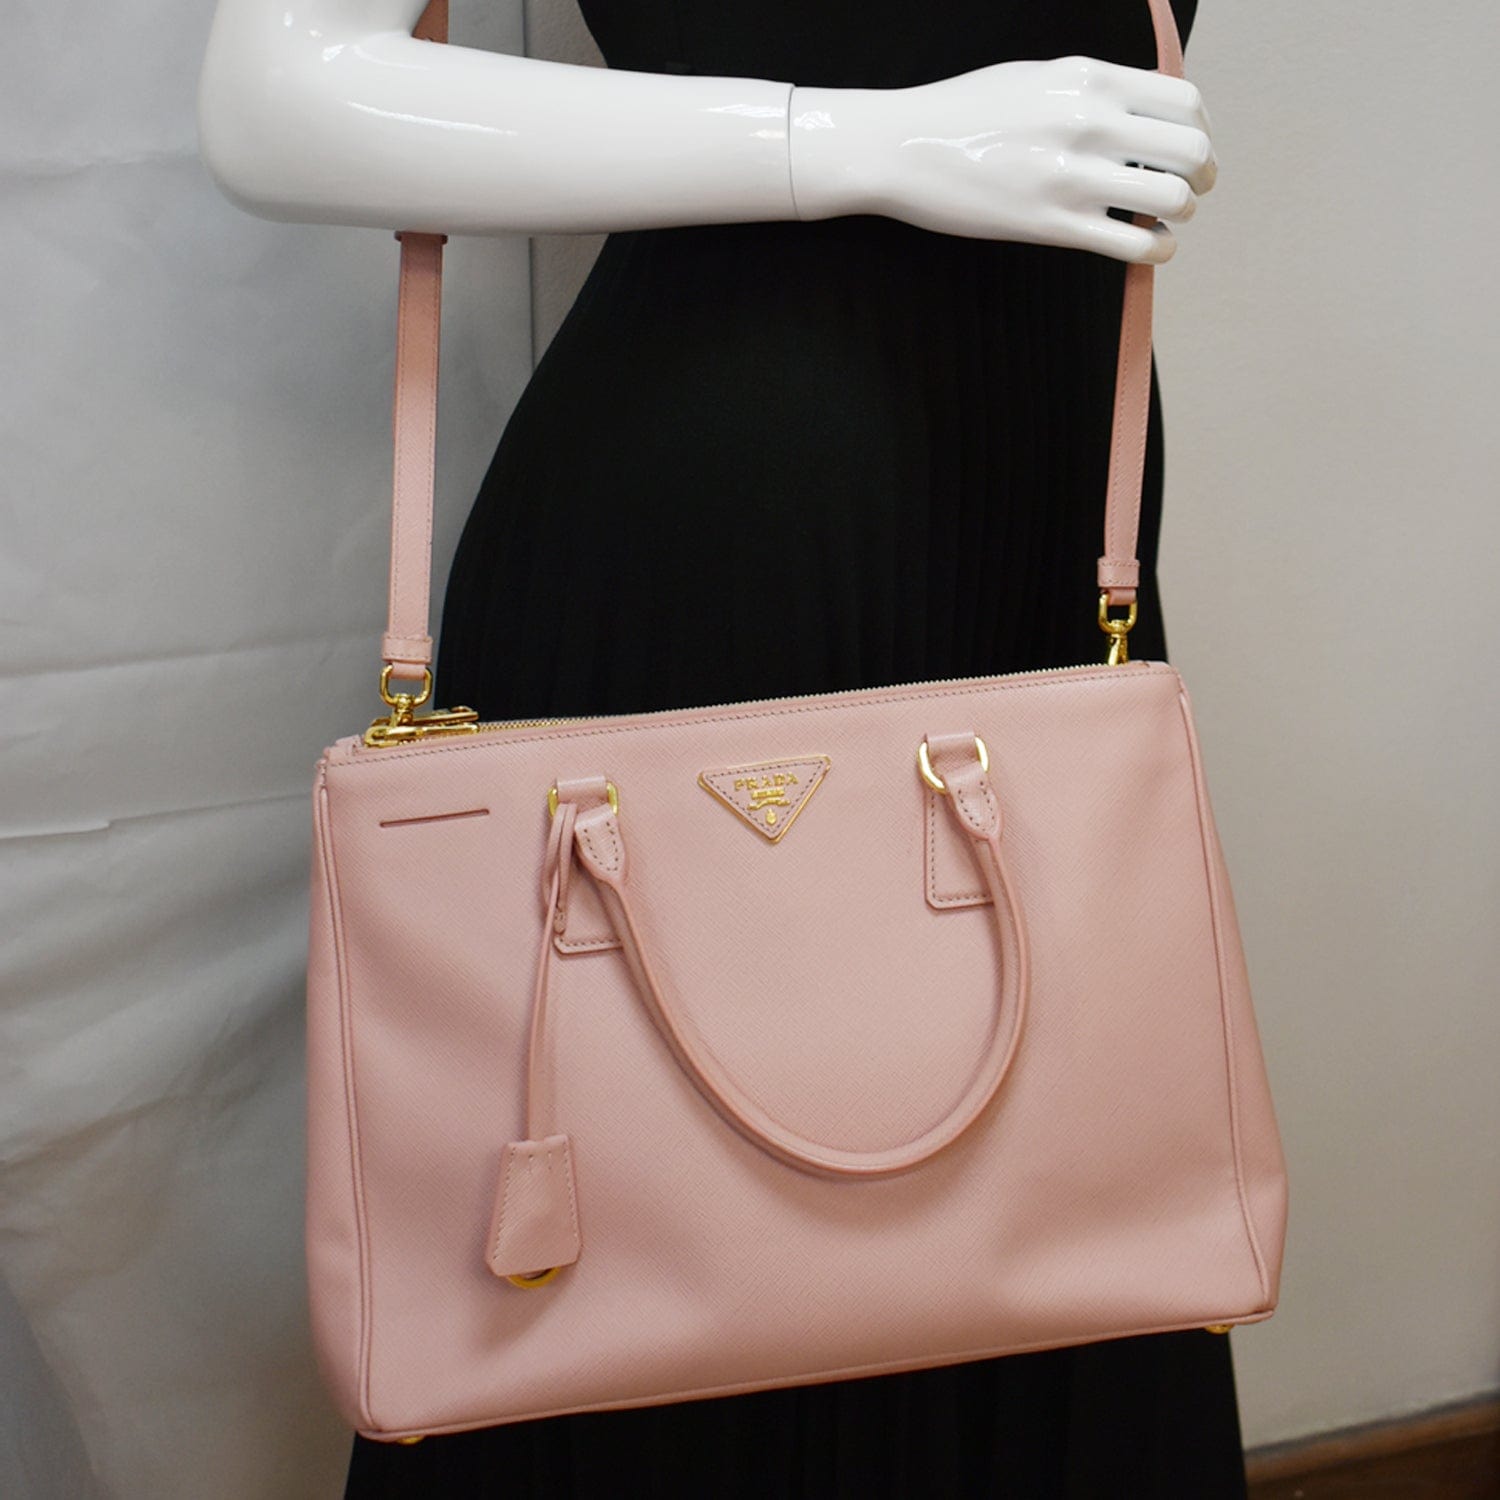 Leather Tote Bag in Pink - Prada